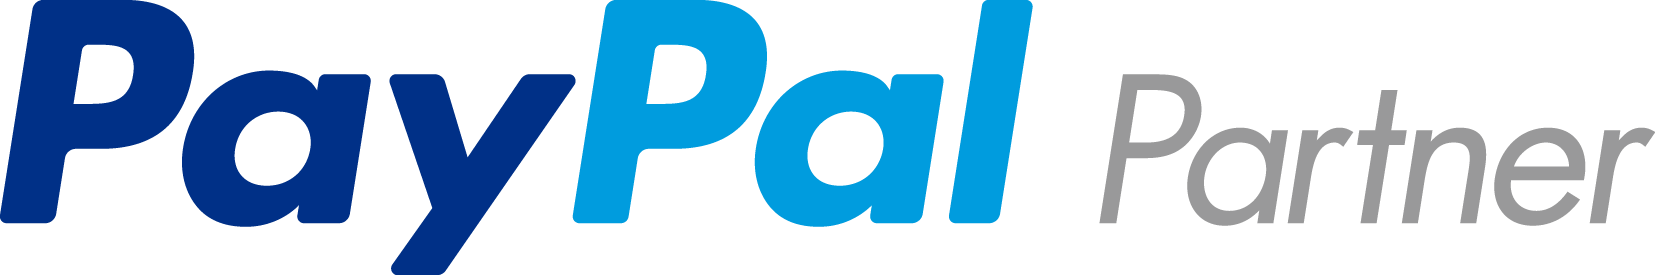 Paypal Partner